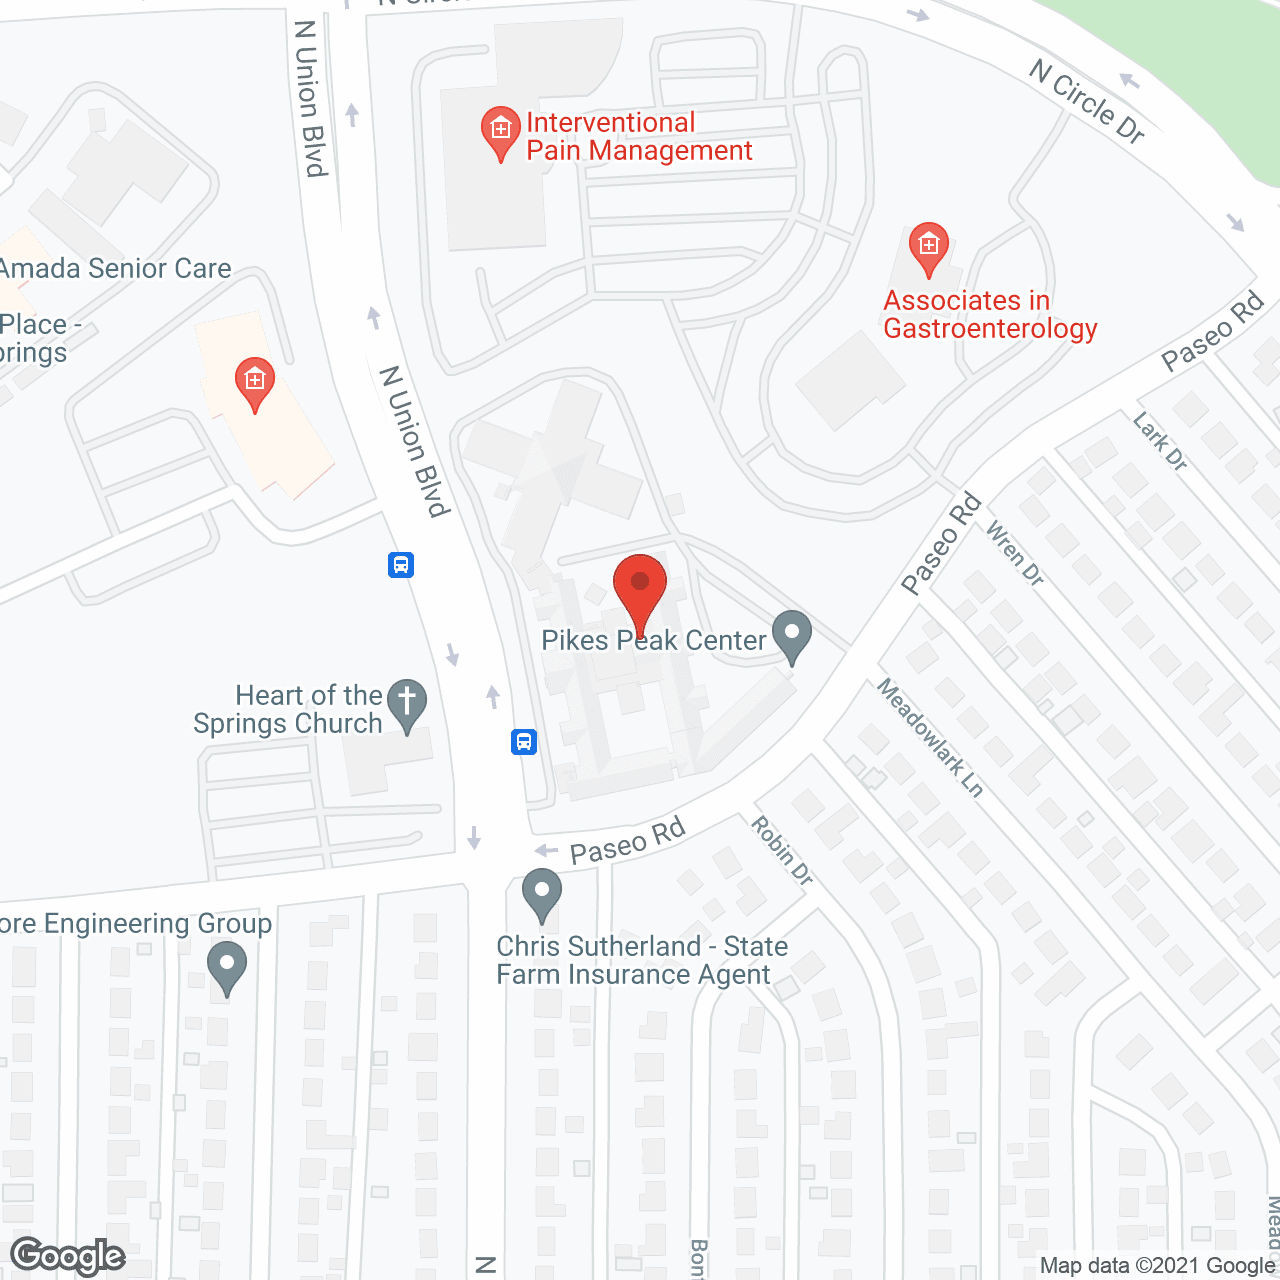 Pikes Peak Care Center in google map